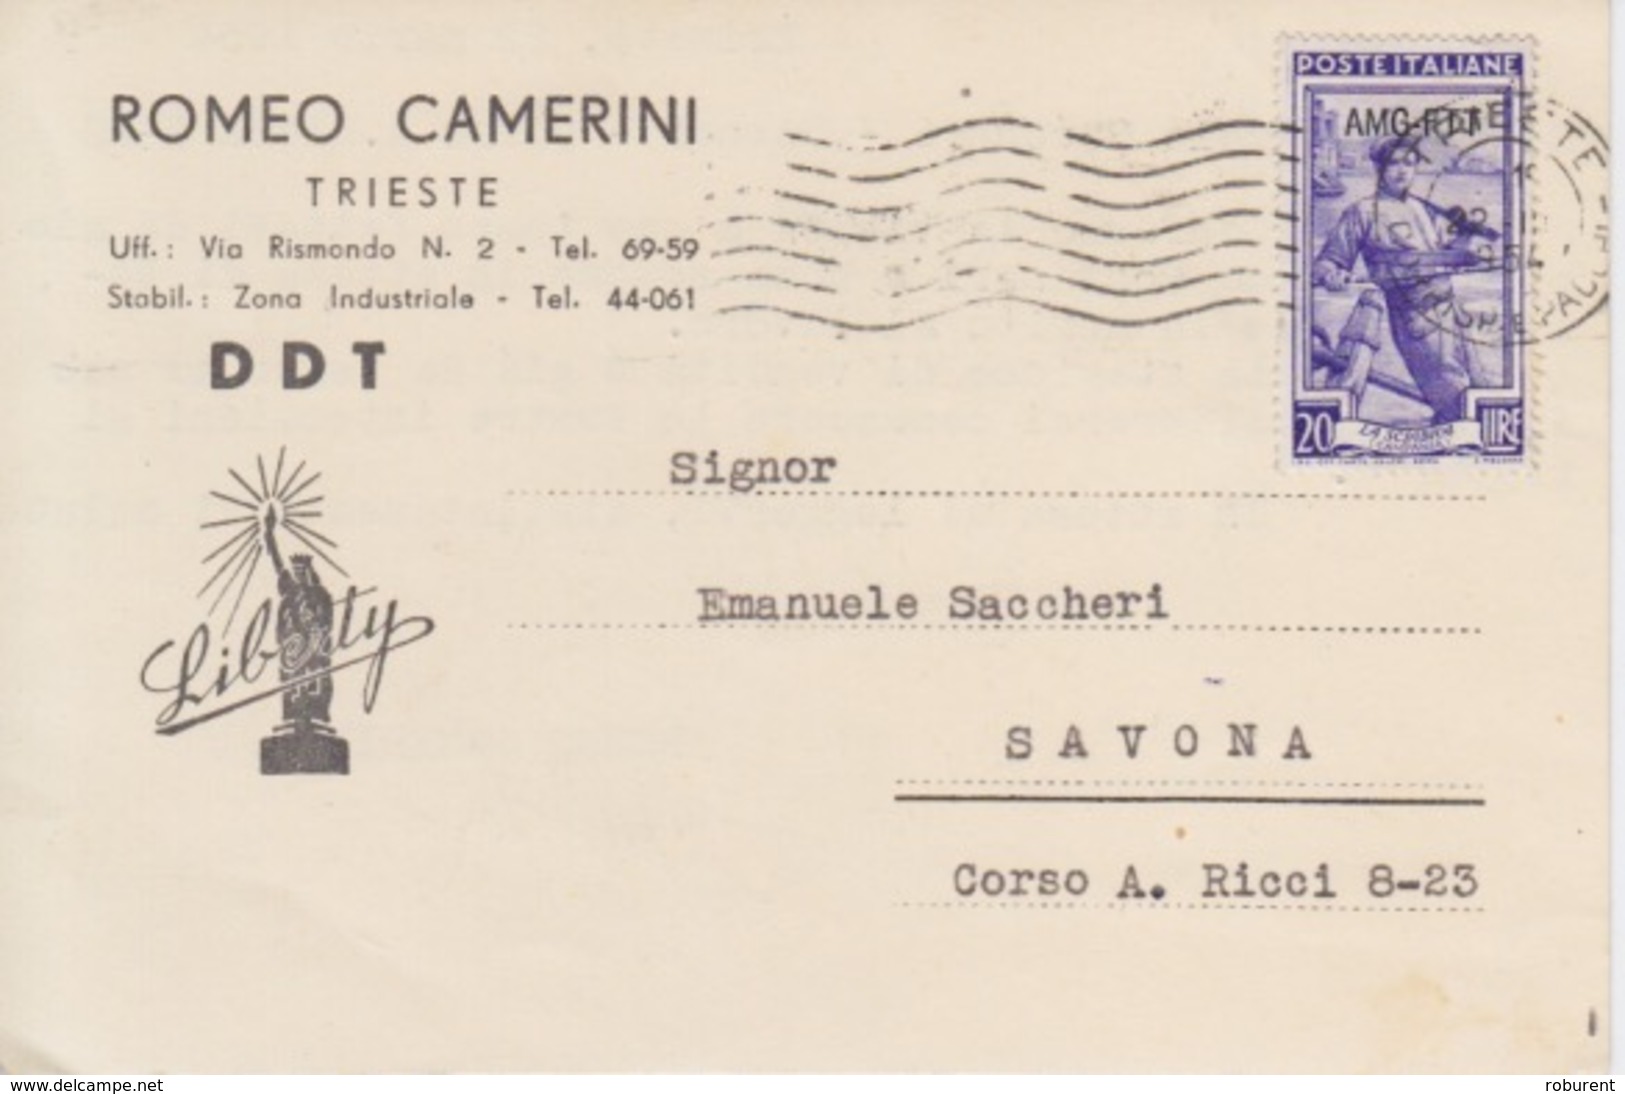 CARTOLINA PUBBLICITARIA  - "D.D.T." - ROMEO CAMERINI - TRIESTE - FRANCOBOLLO LIRE 20 AMG-FTT - Pubblicitari